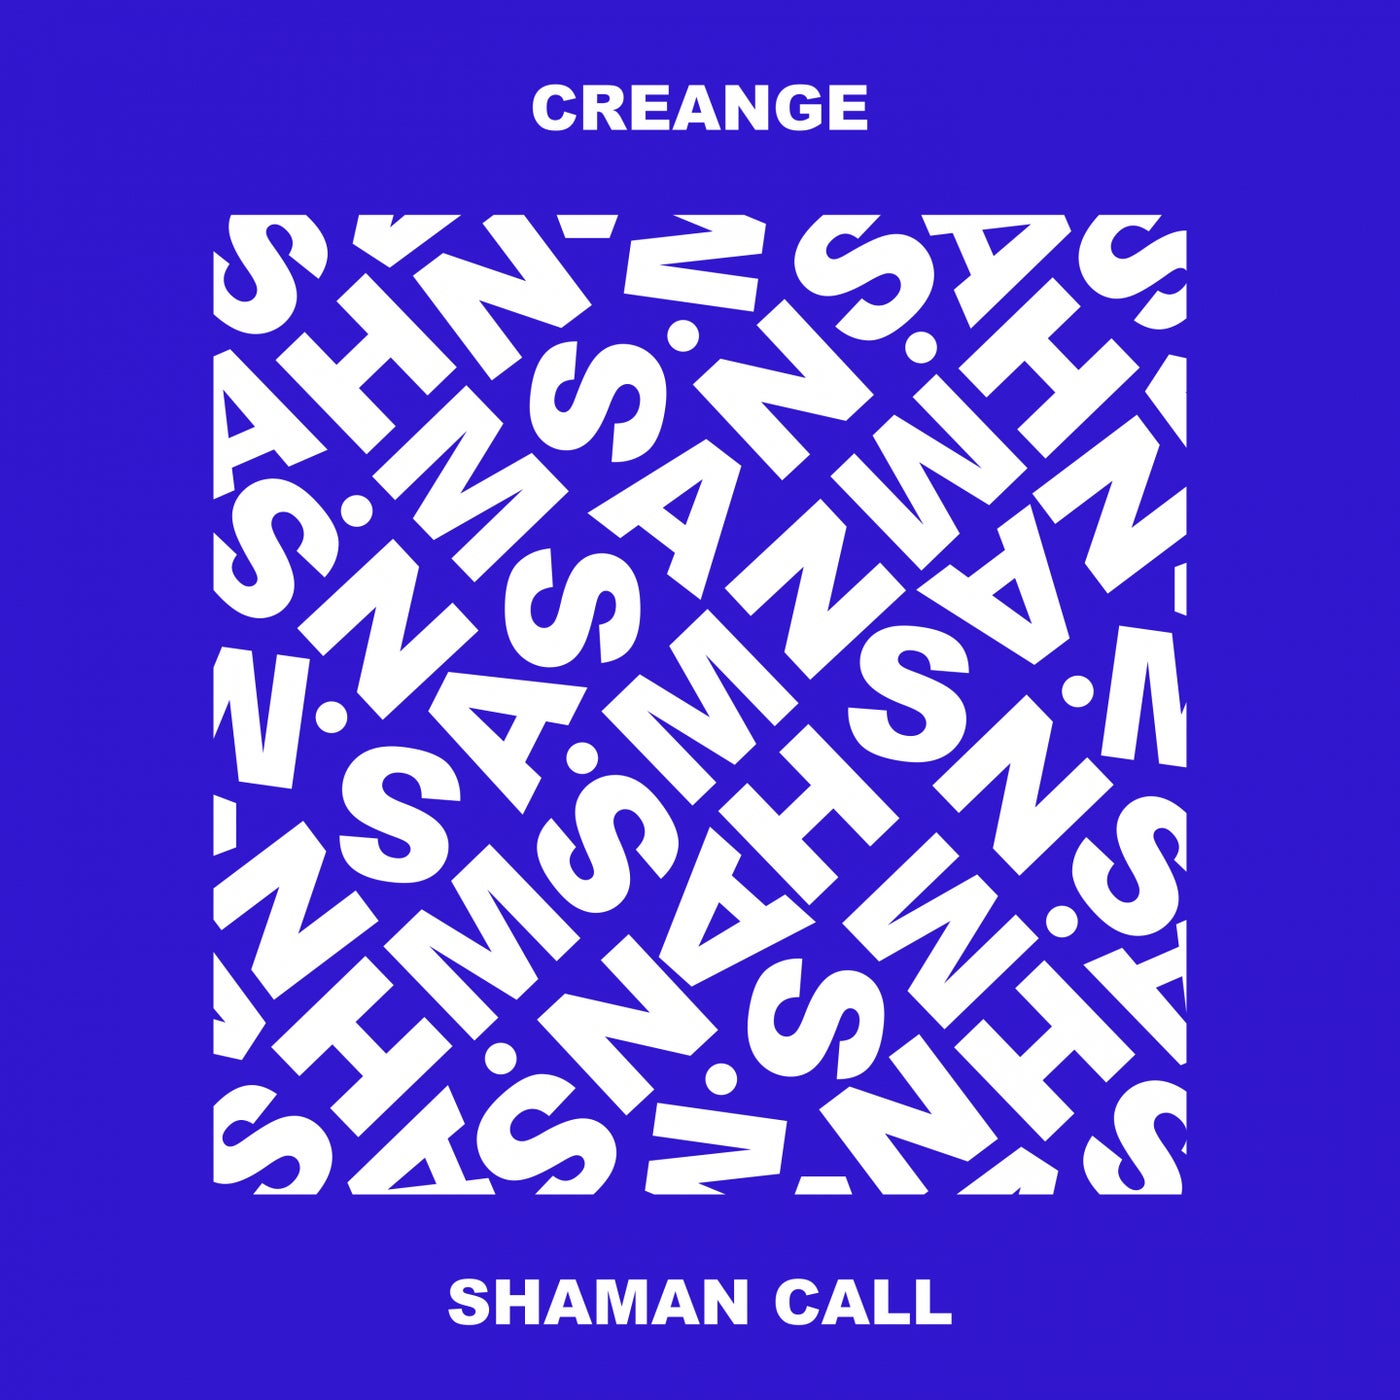 Shaman Call